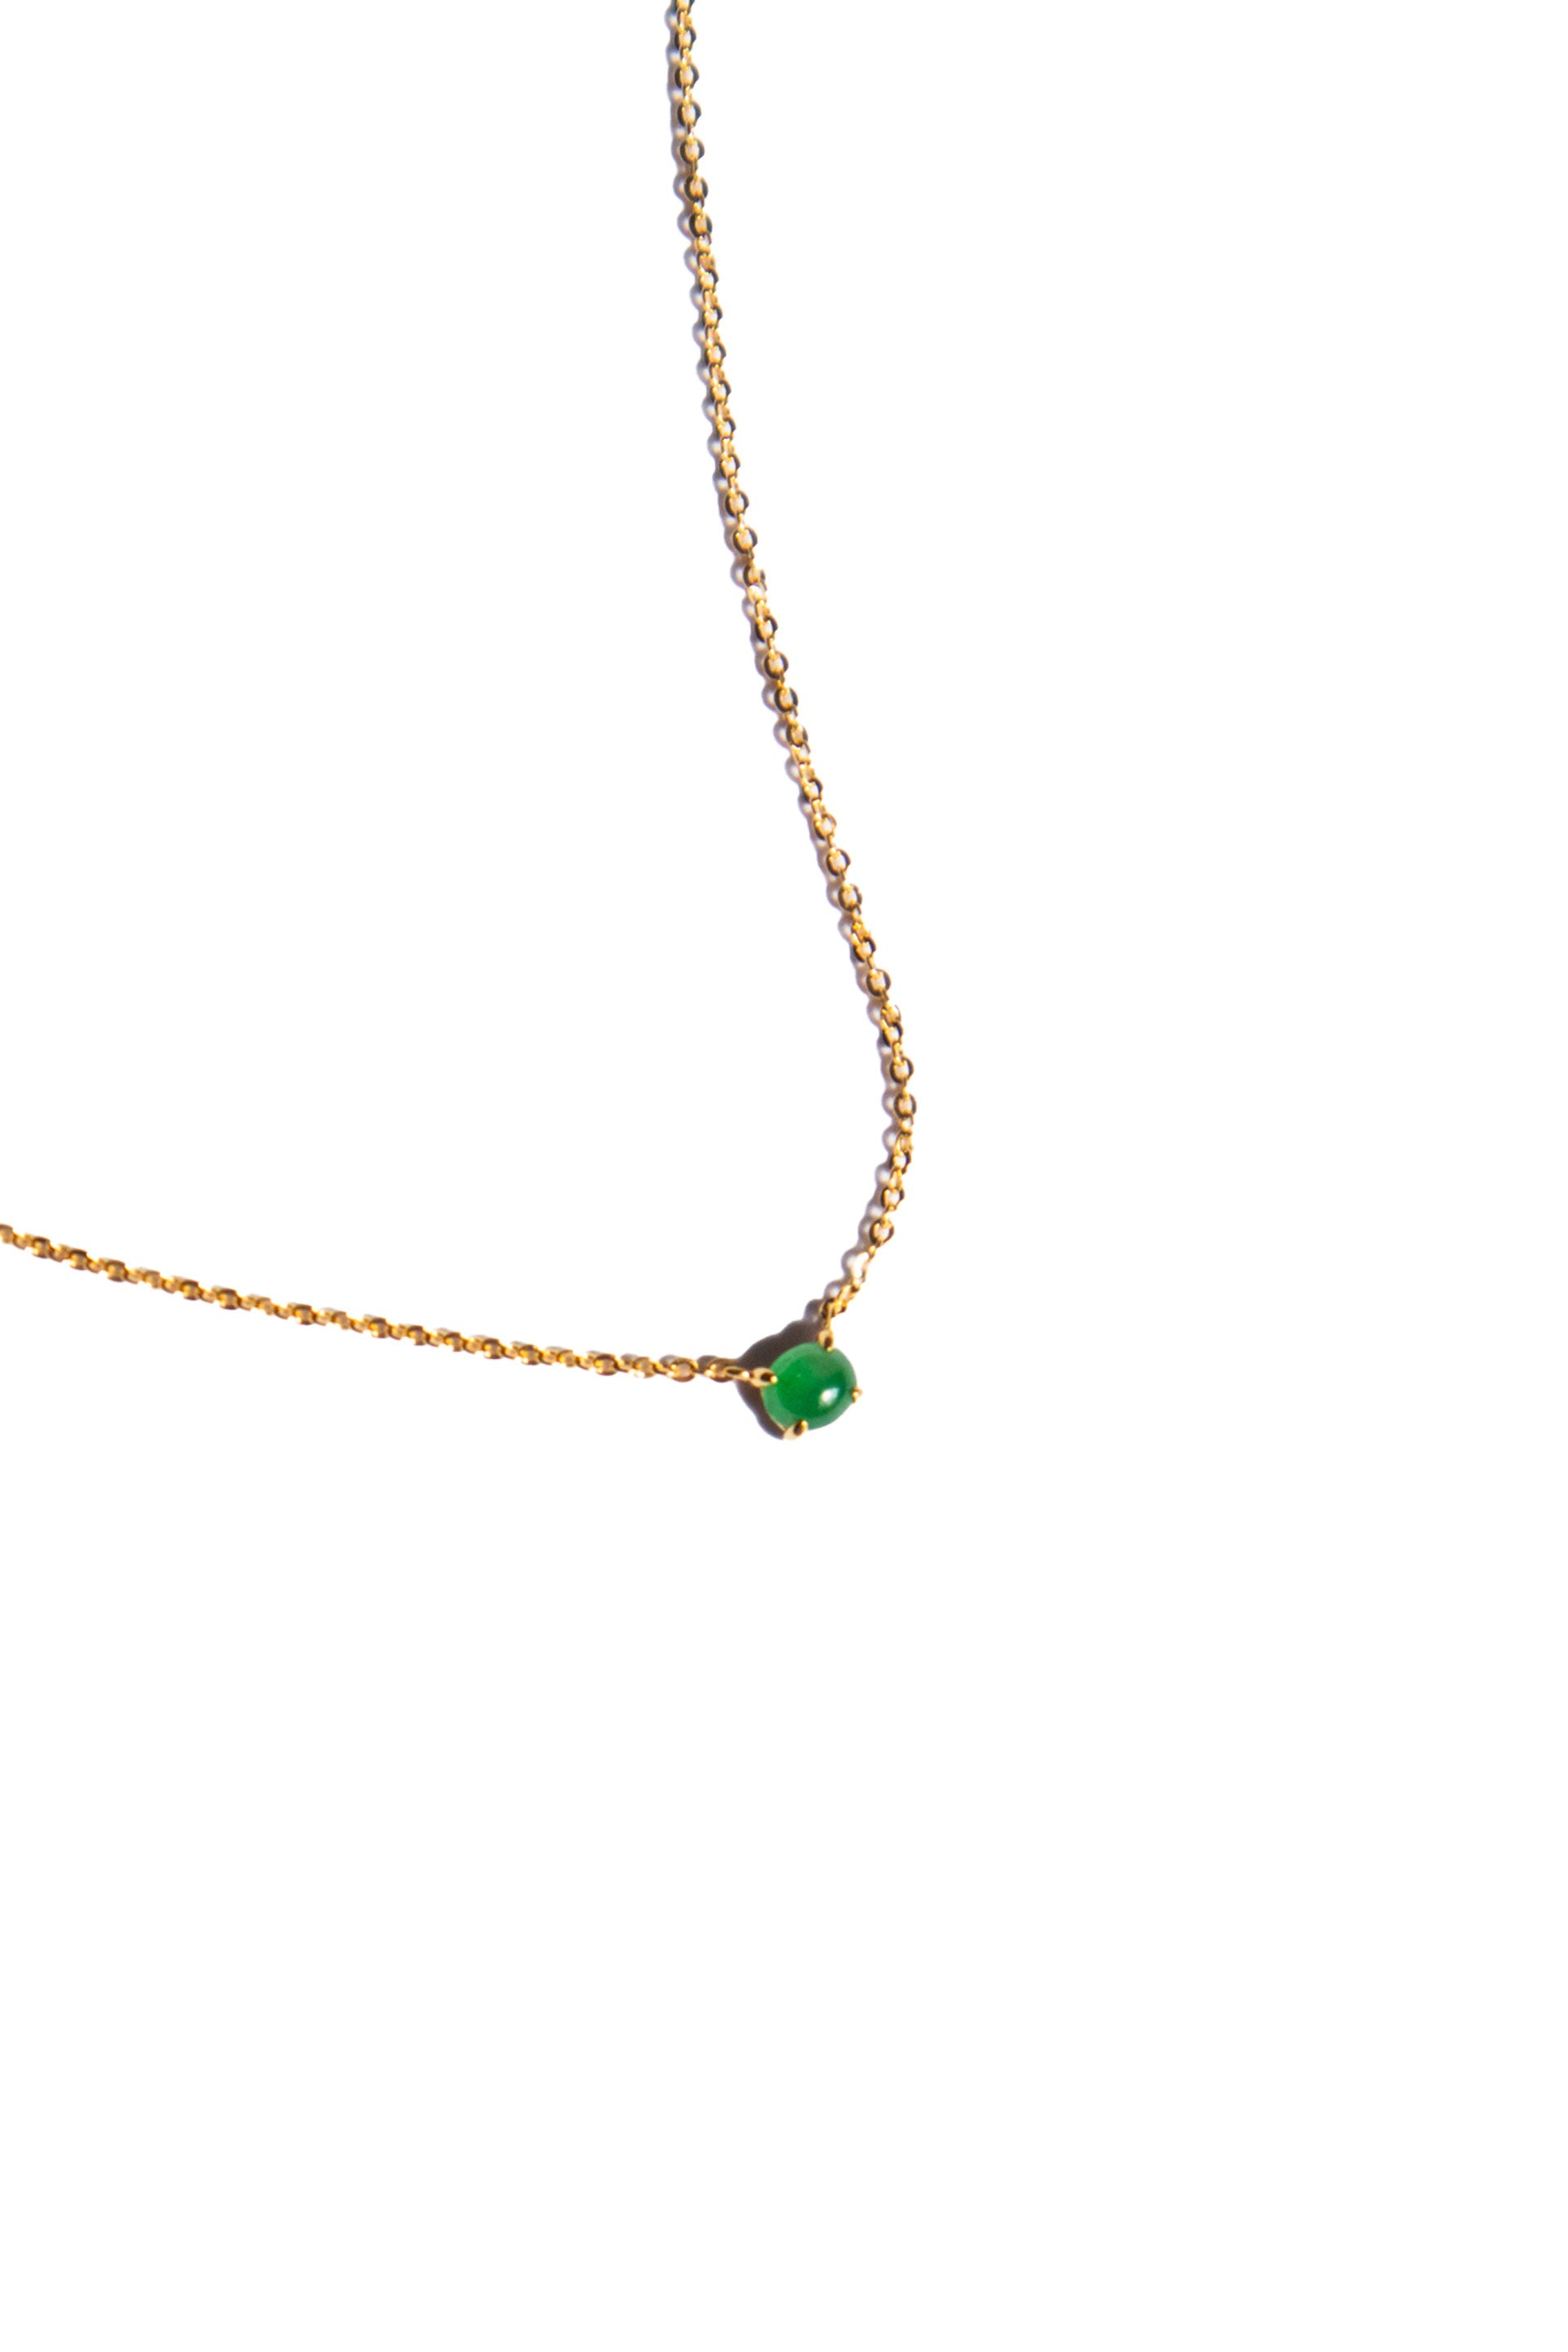 Women’s Seree Atelier Mila Imperial Green Jade Necklace